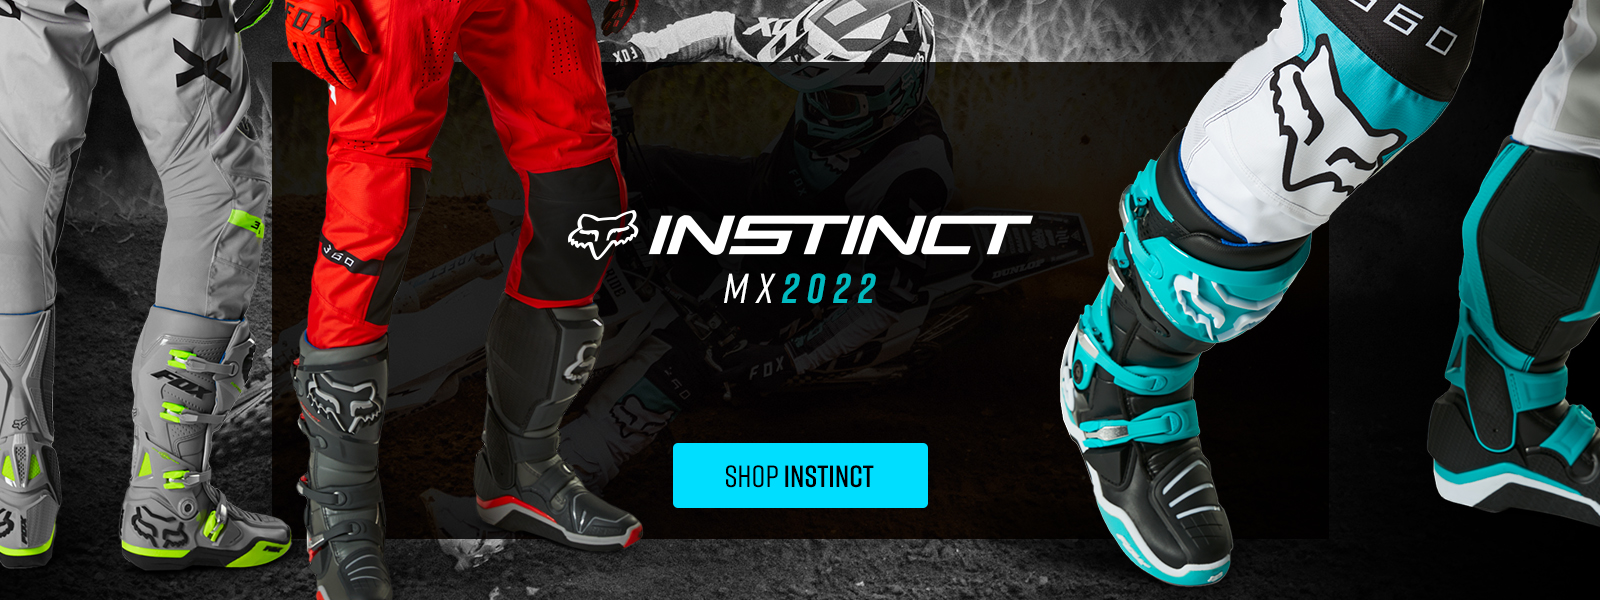 Instinct MX2022